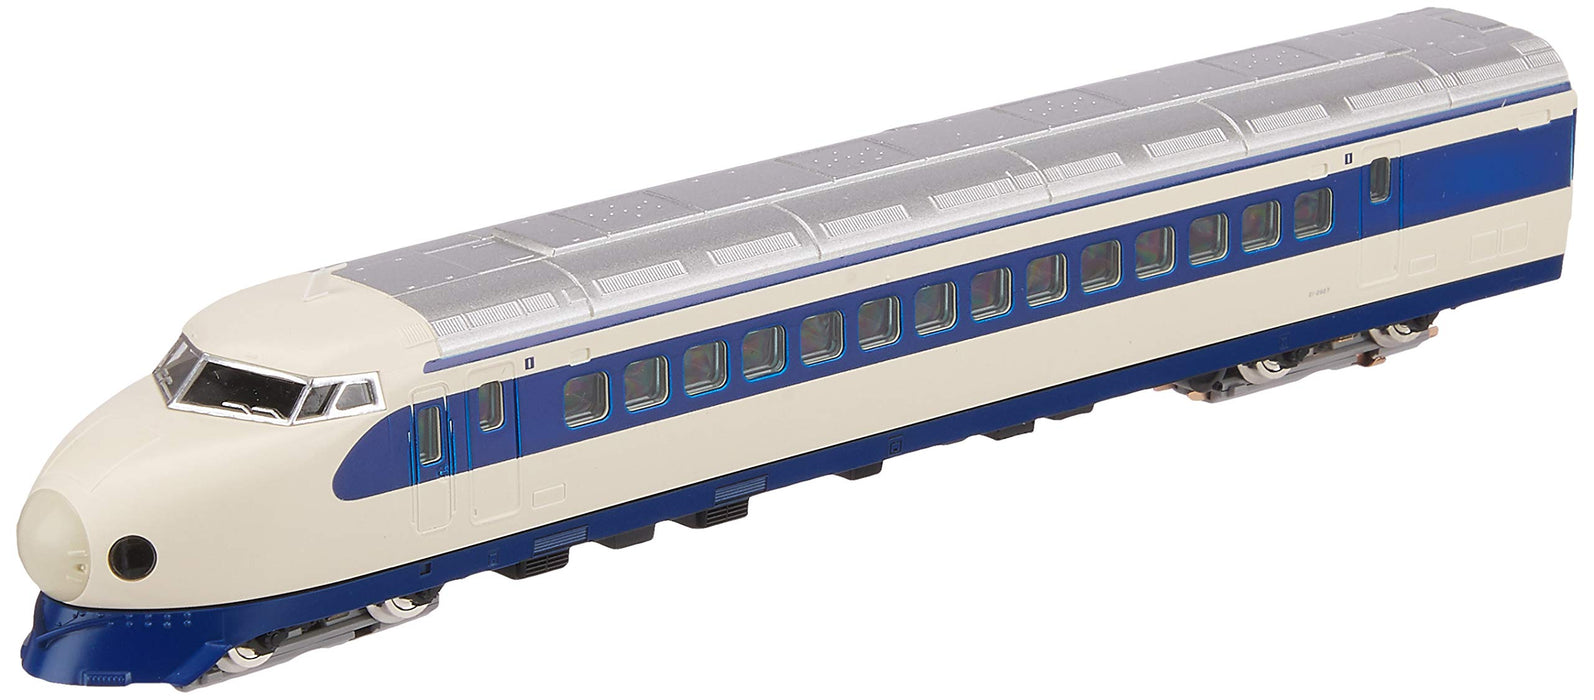 Tomytec Kodama FM-015 Railway Model Train - Tomix N Gauge 0-2000 Series